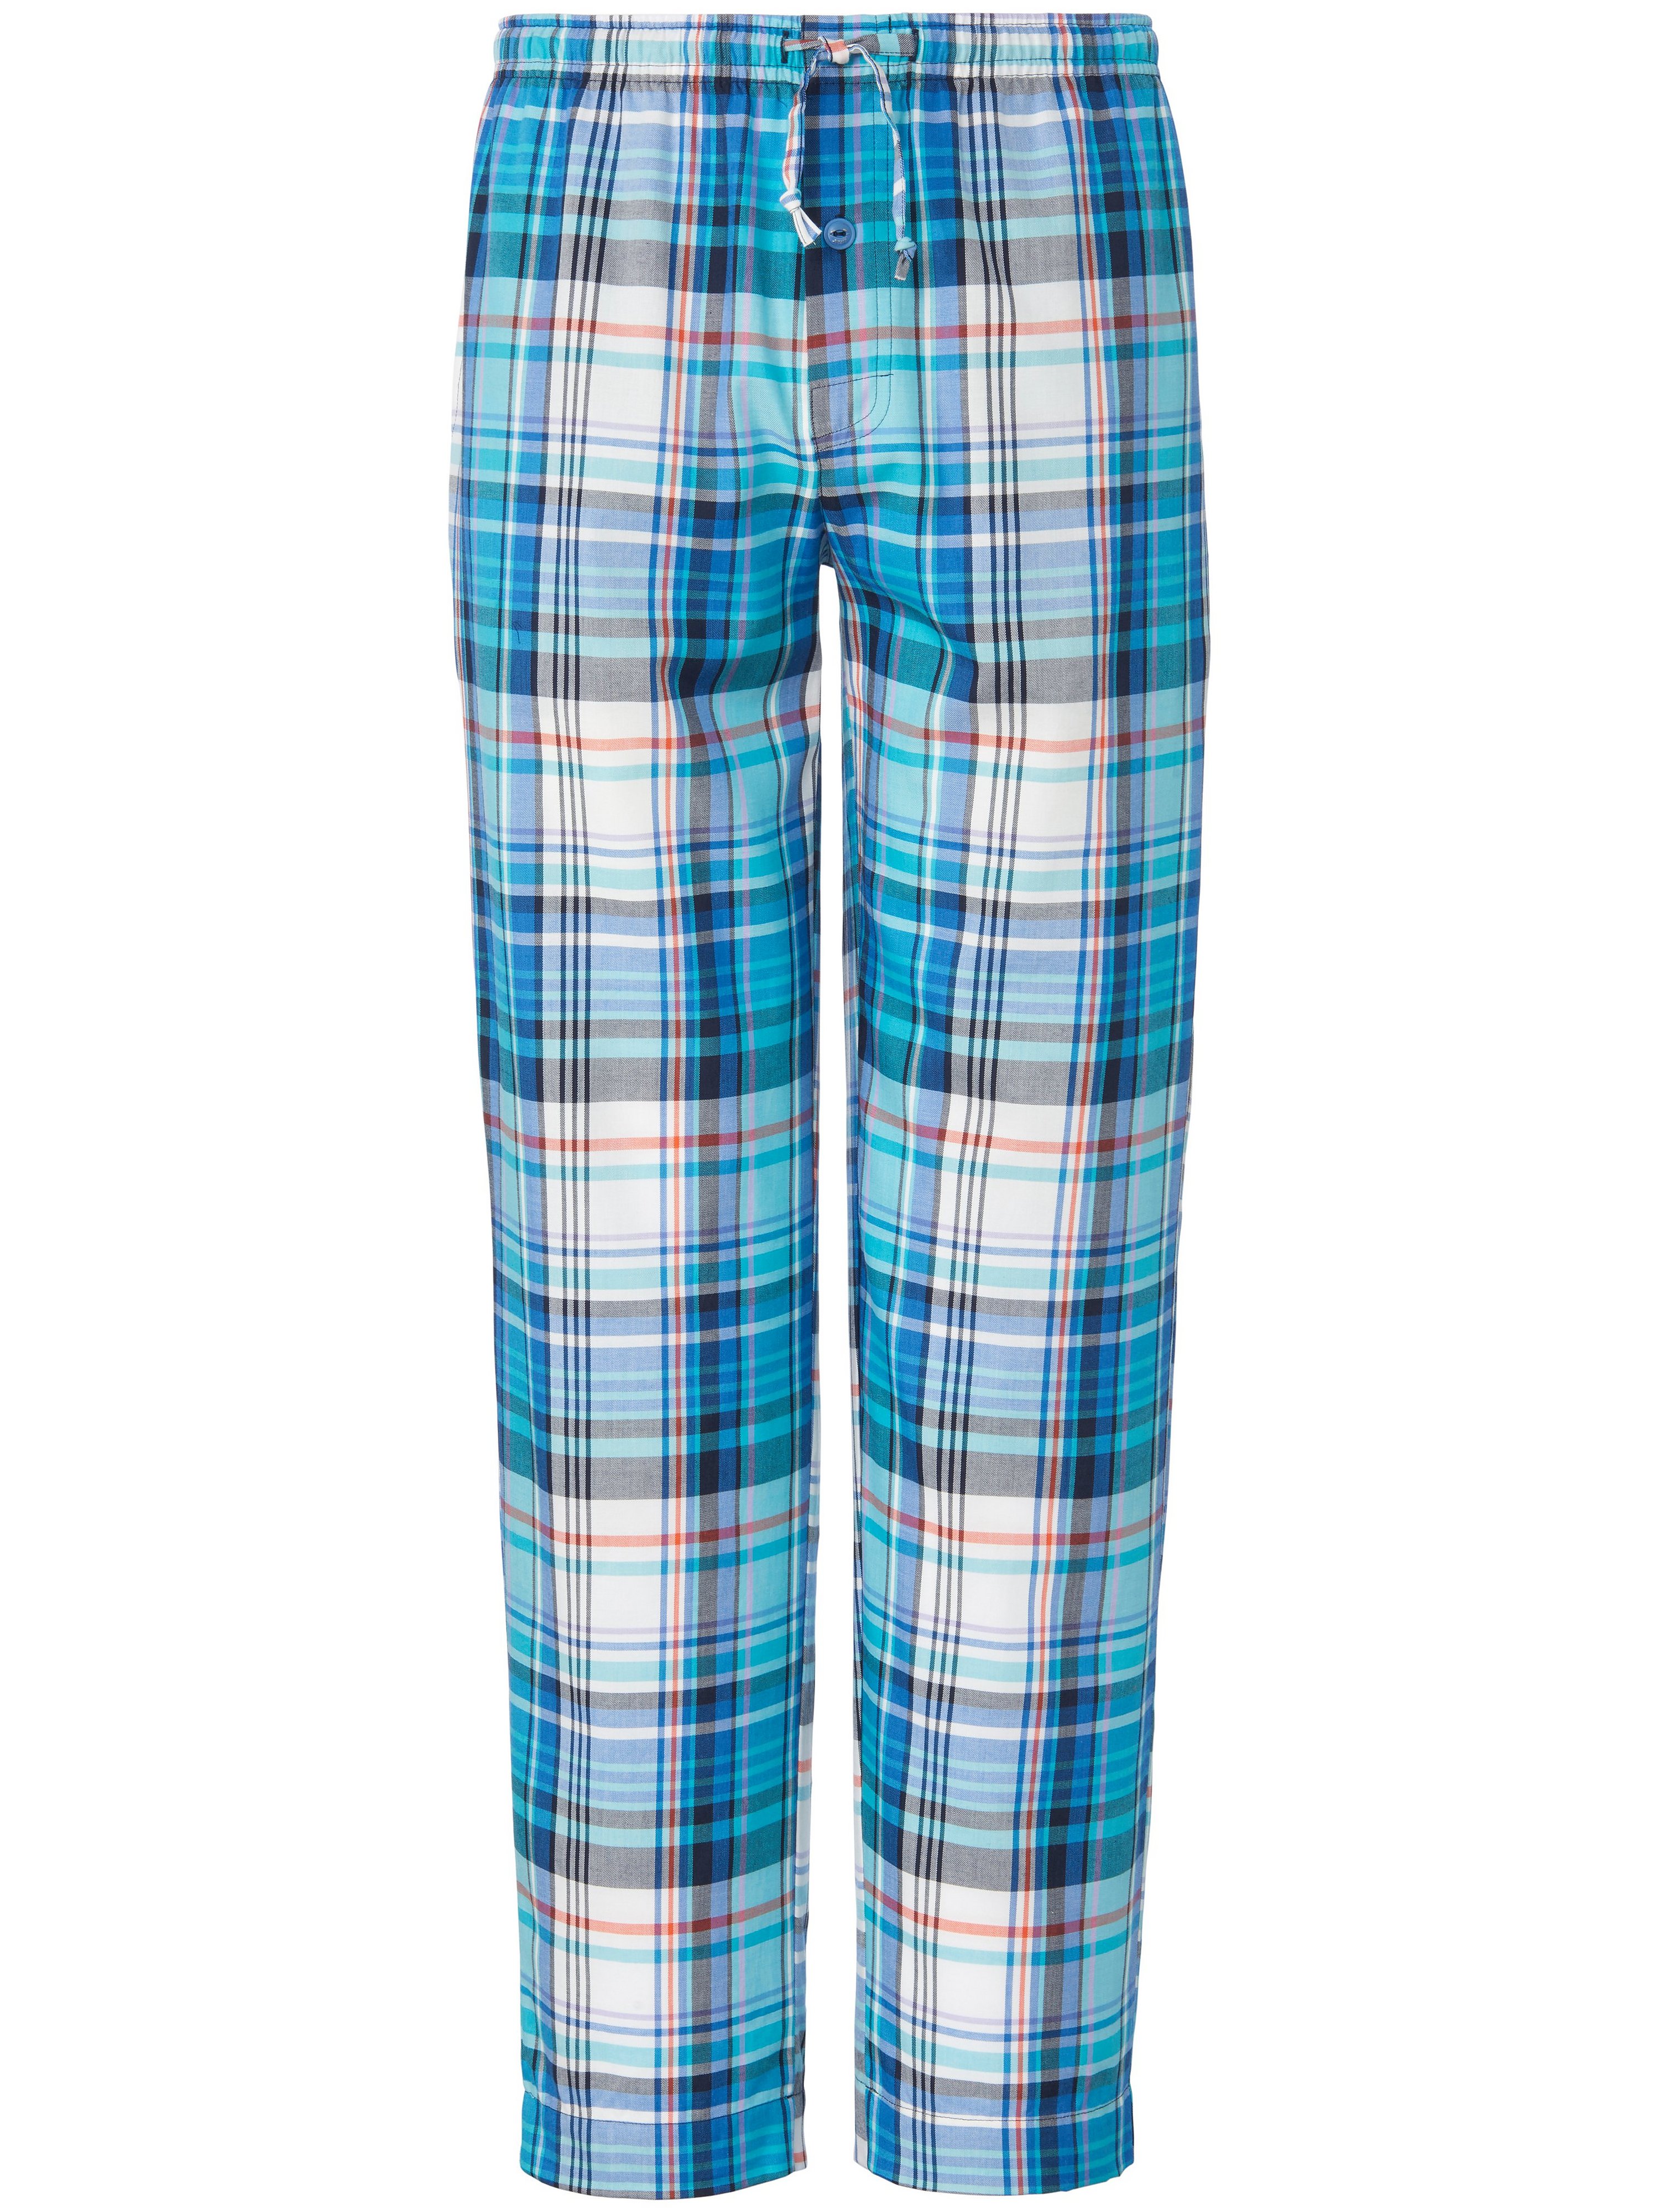 Le pantalon pyjama avec motif carreaux  Jockey turquoise